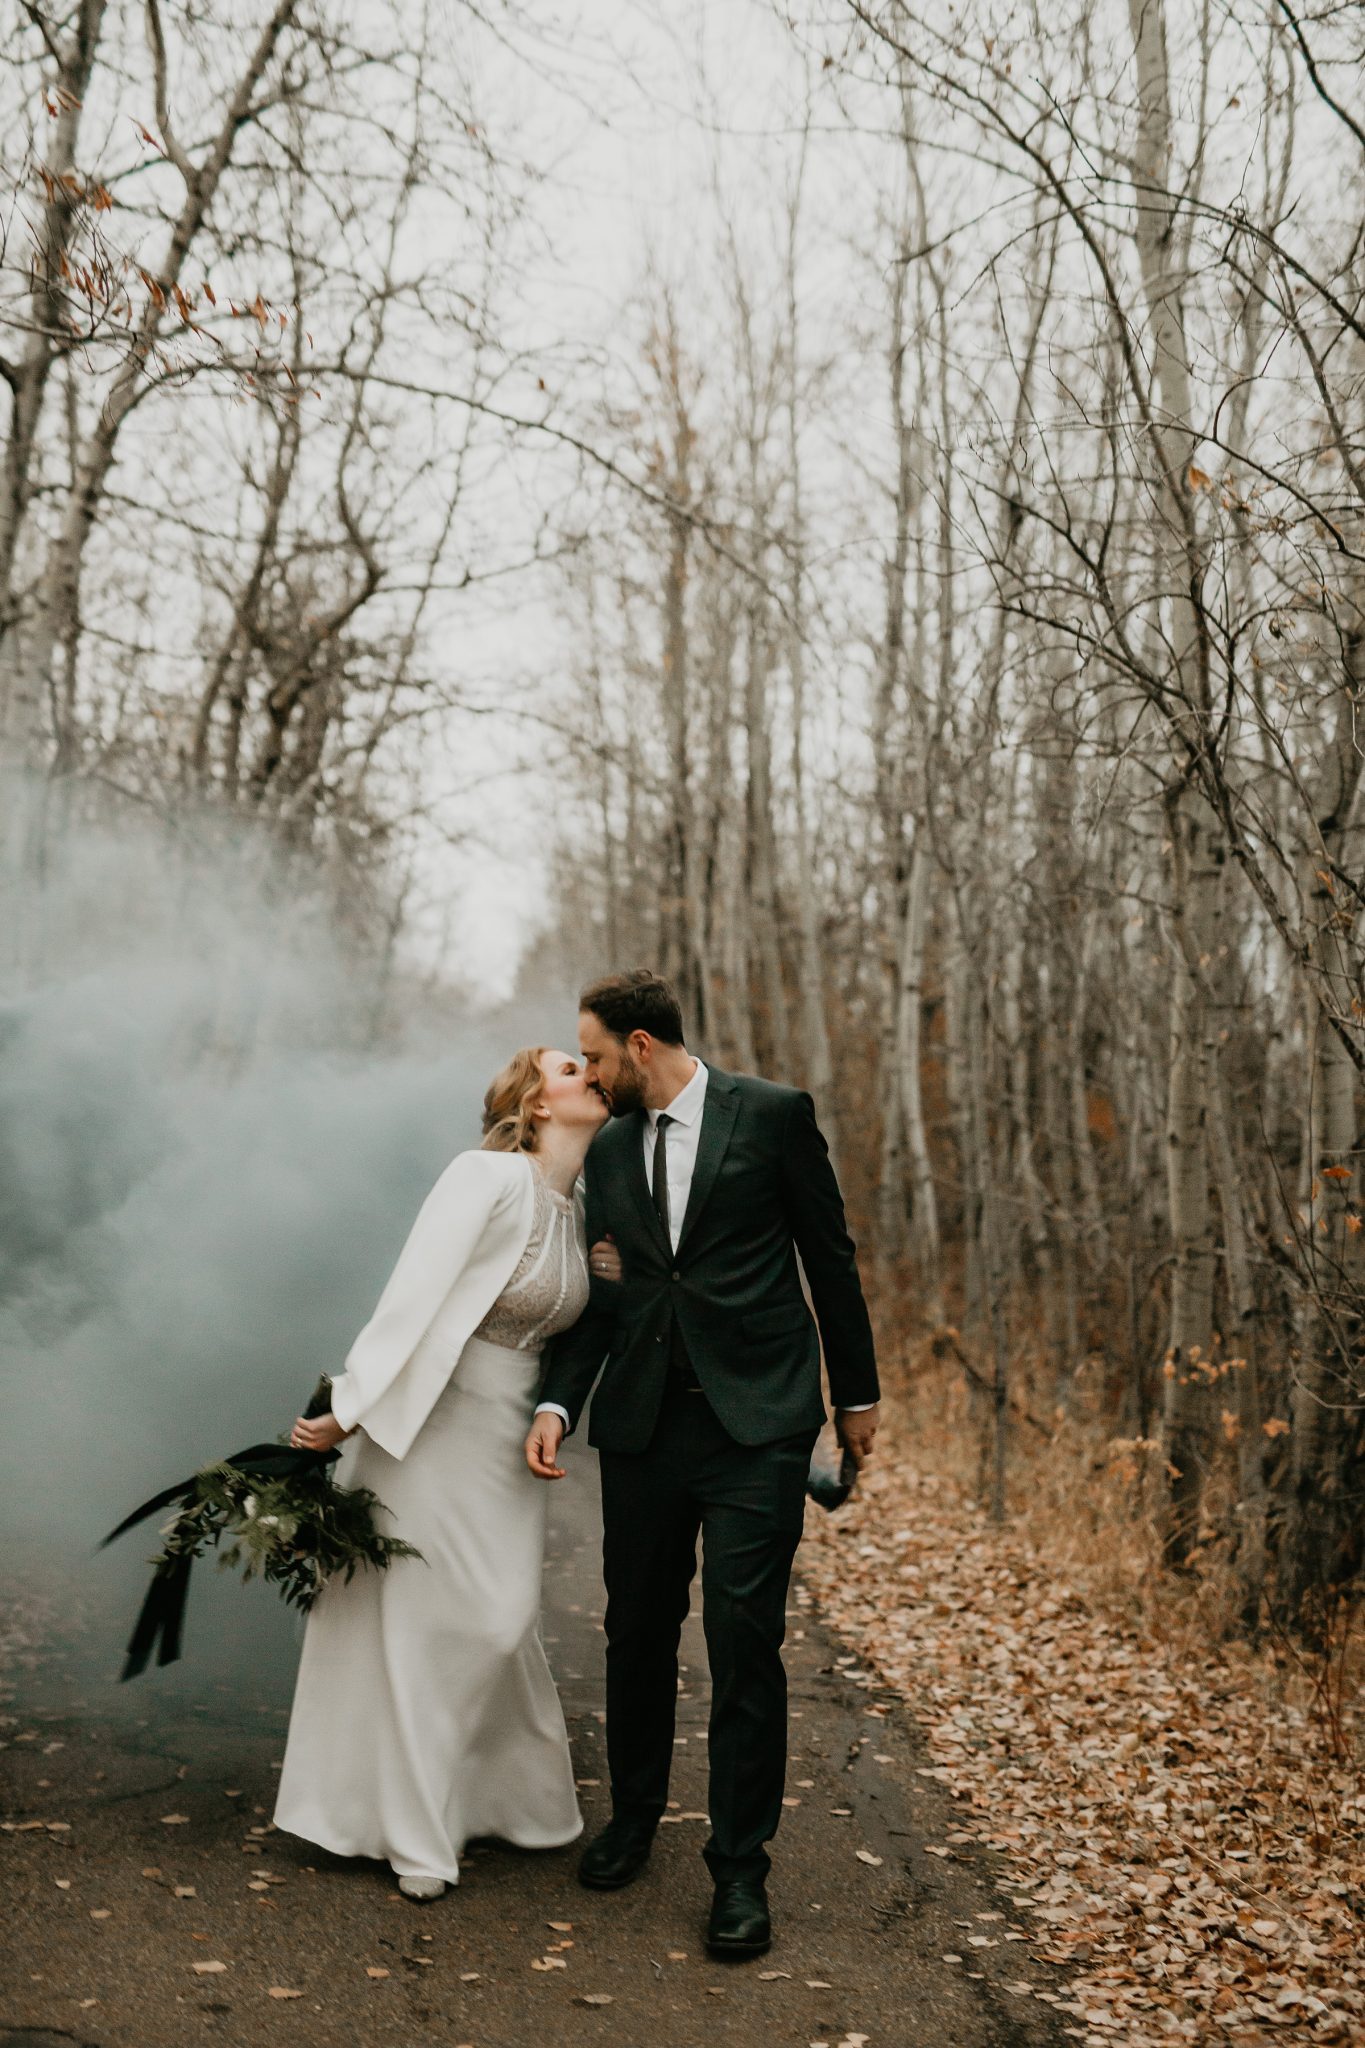 October wedding inspiration with a white crepe wedding jacket and grey smoke bombs